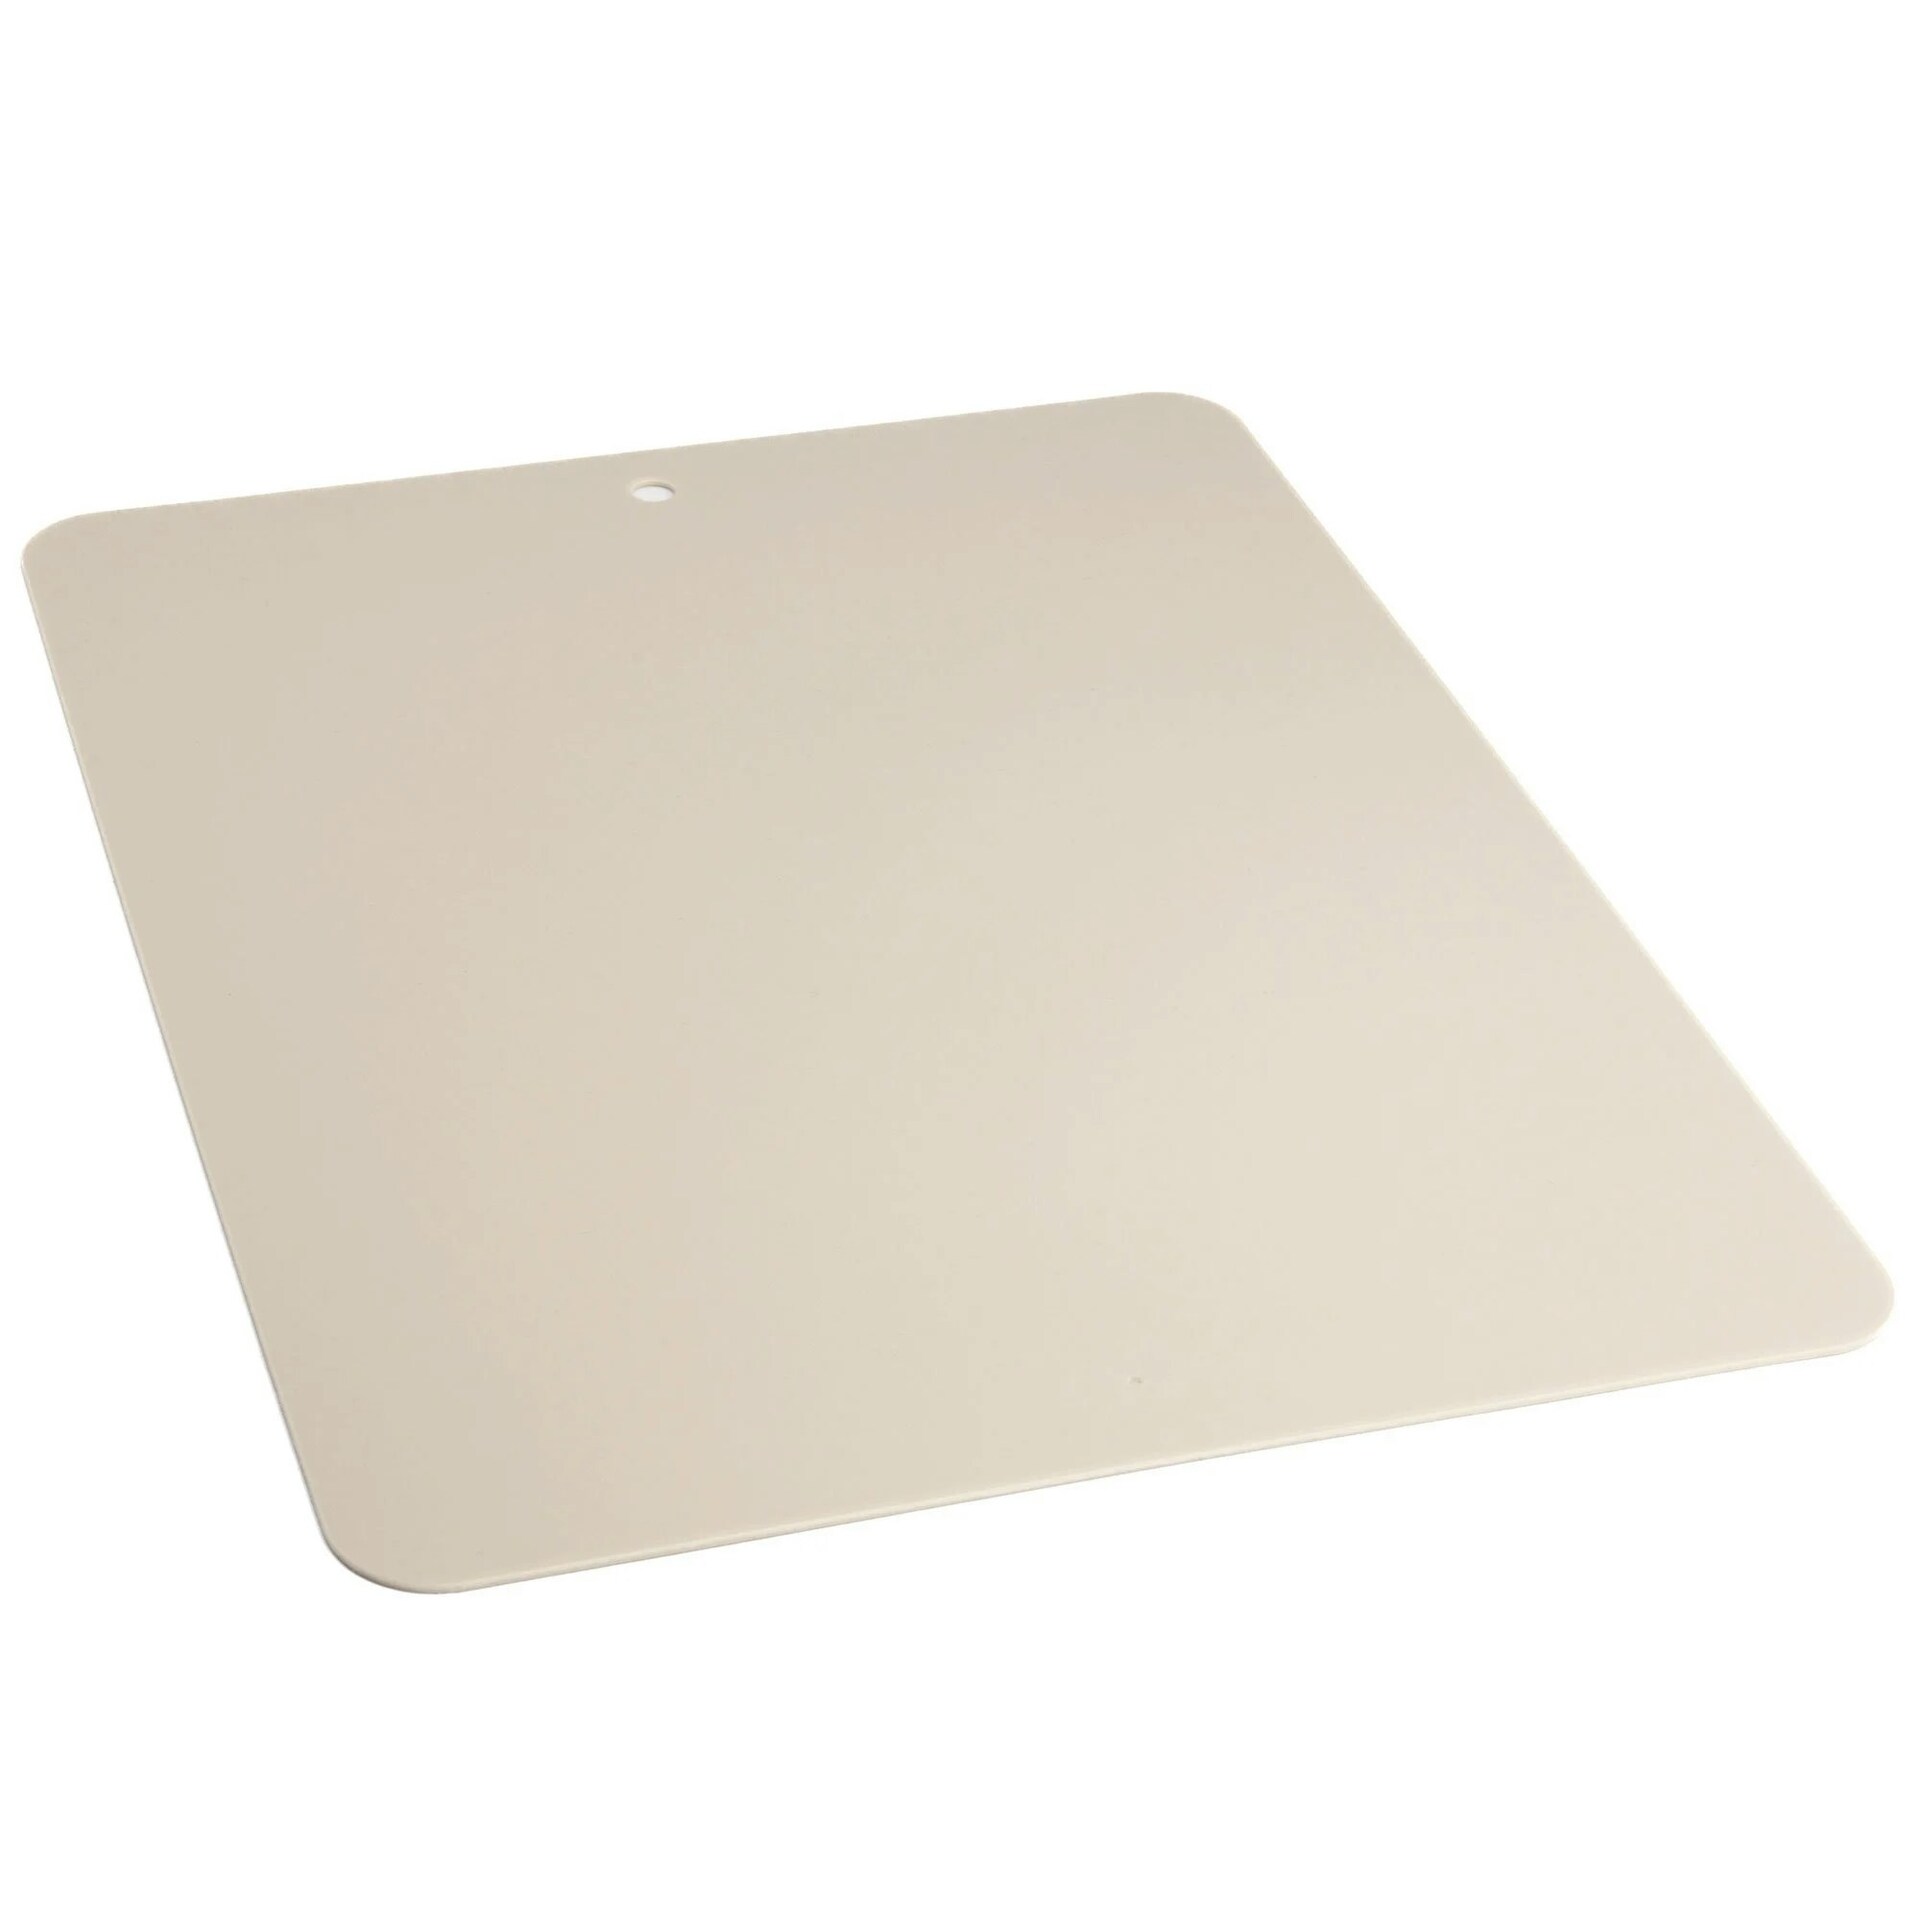 https://royaldesign.com/image/2/mareld-mareld-2-pack-flexible-cutting-board-bioplastic-beige-2